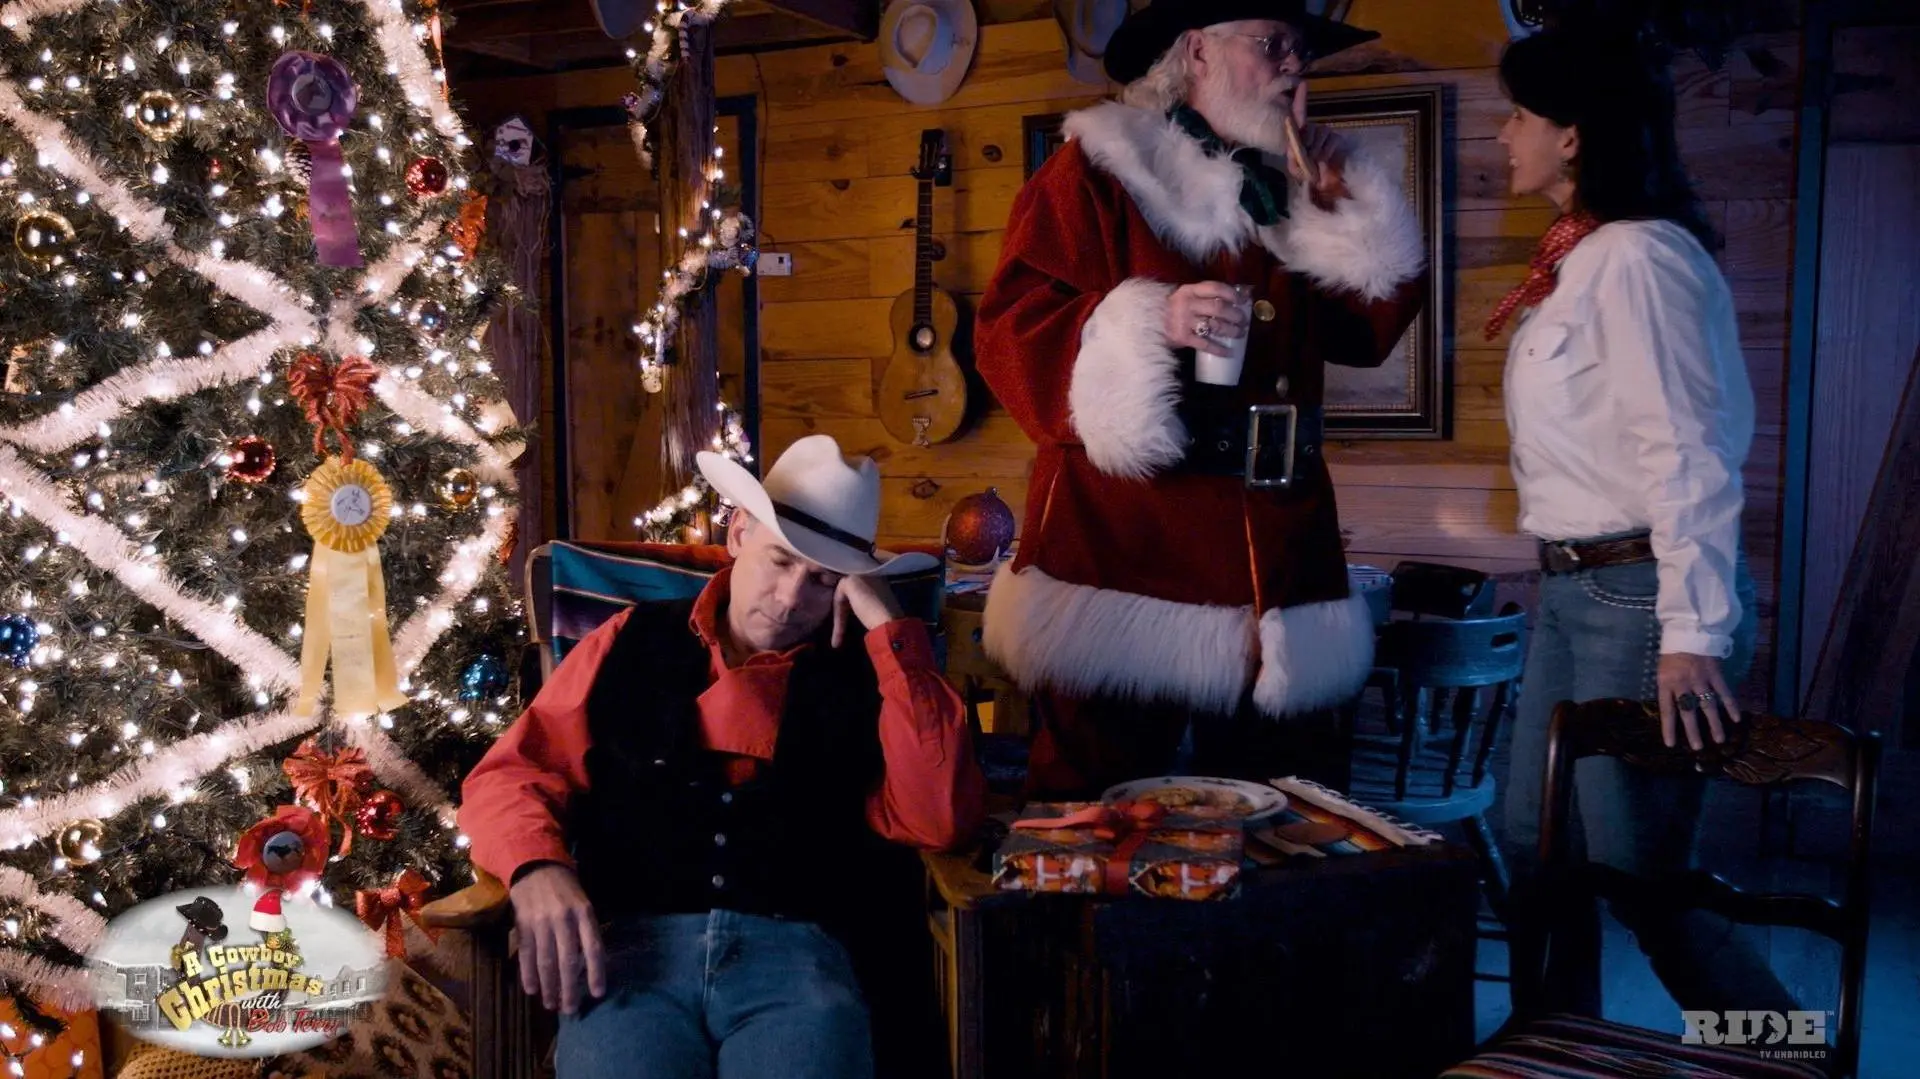 A Cowboy Christmas with Bob Terry_peliplat